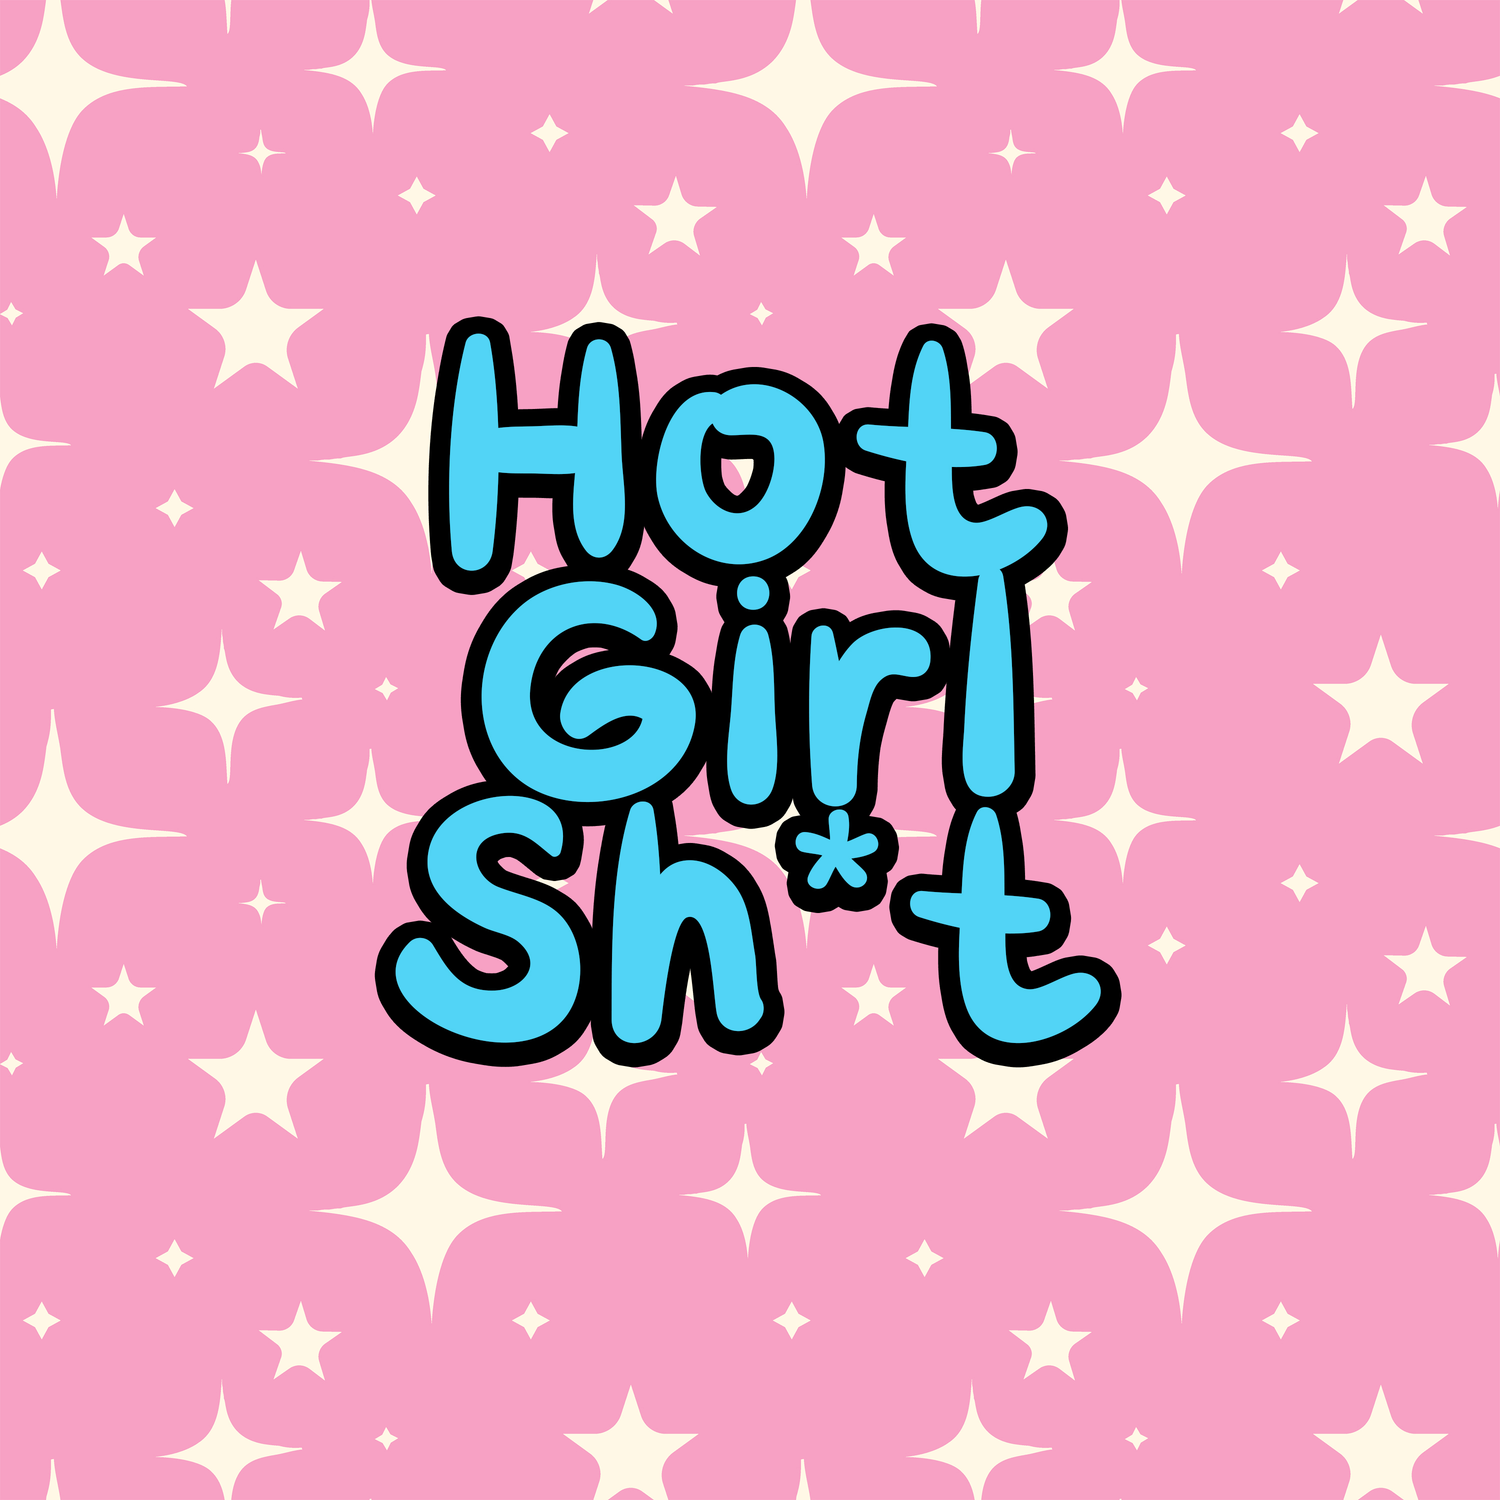 Hot Girl Sh*t